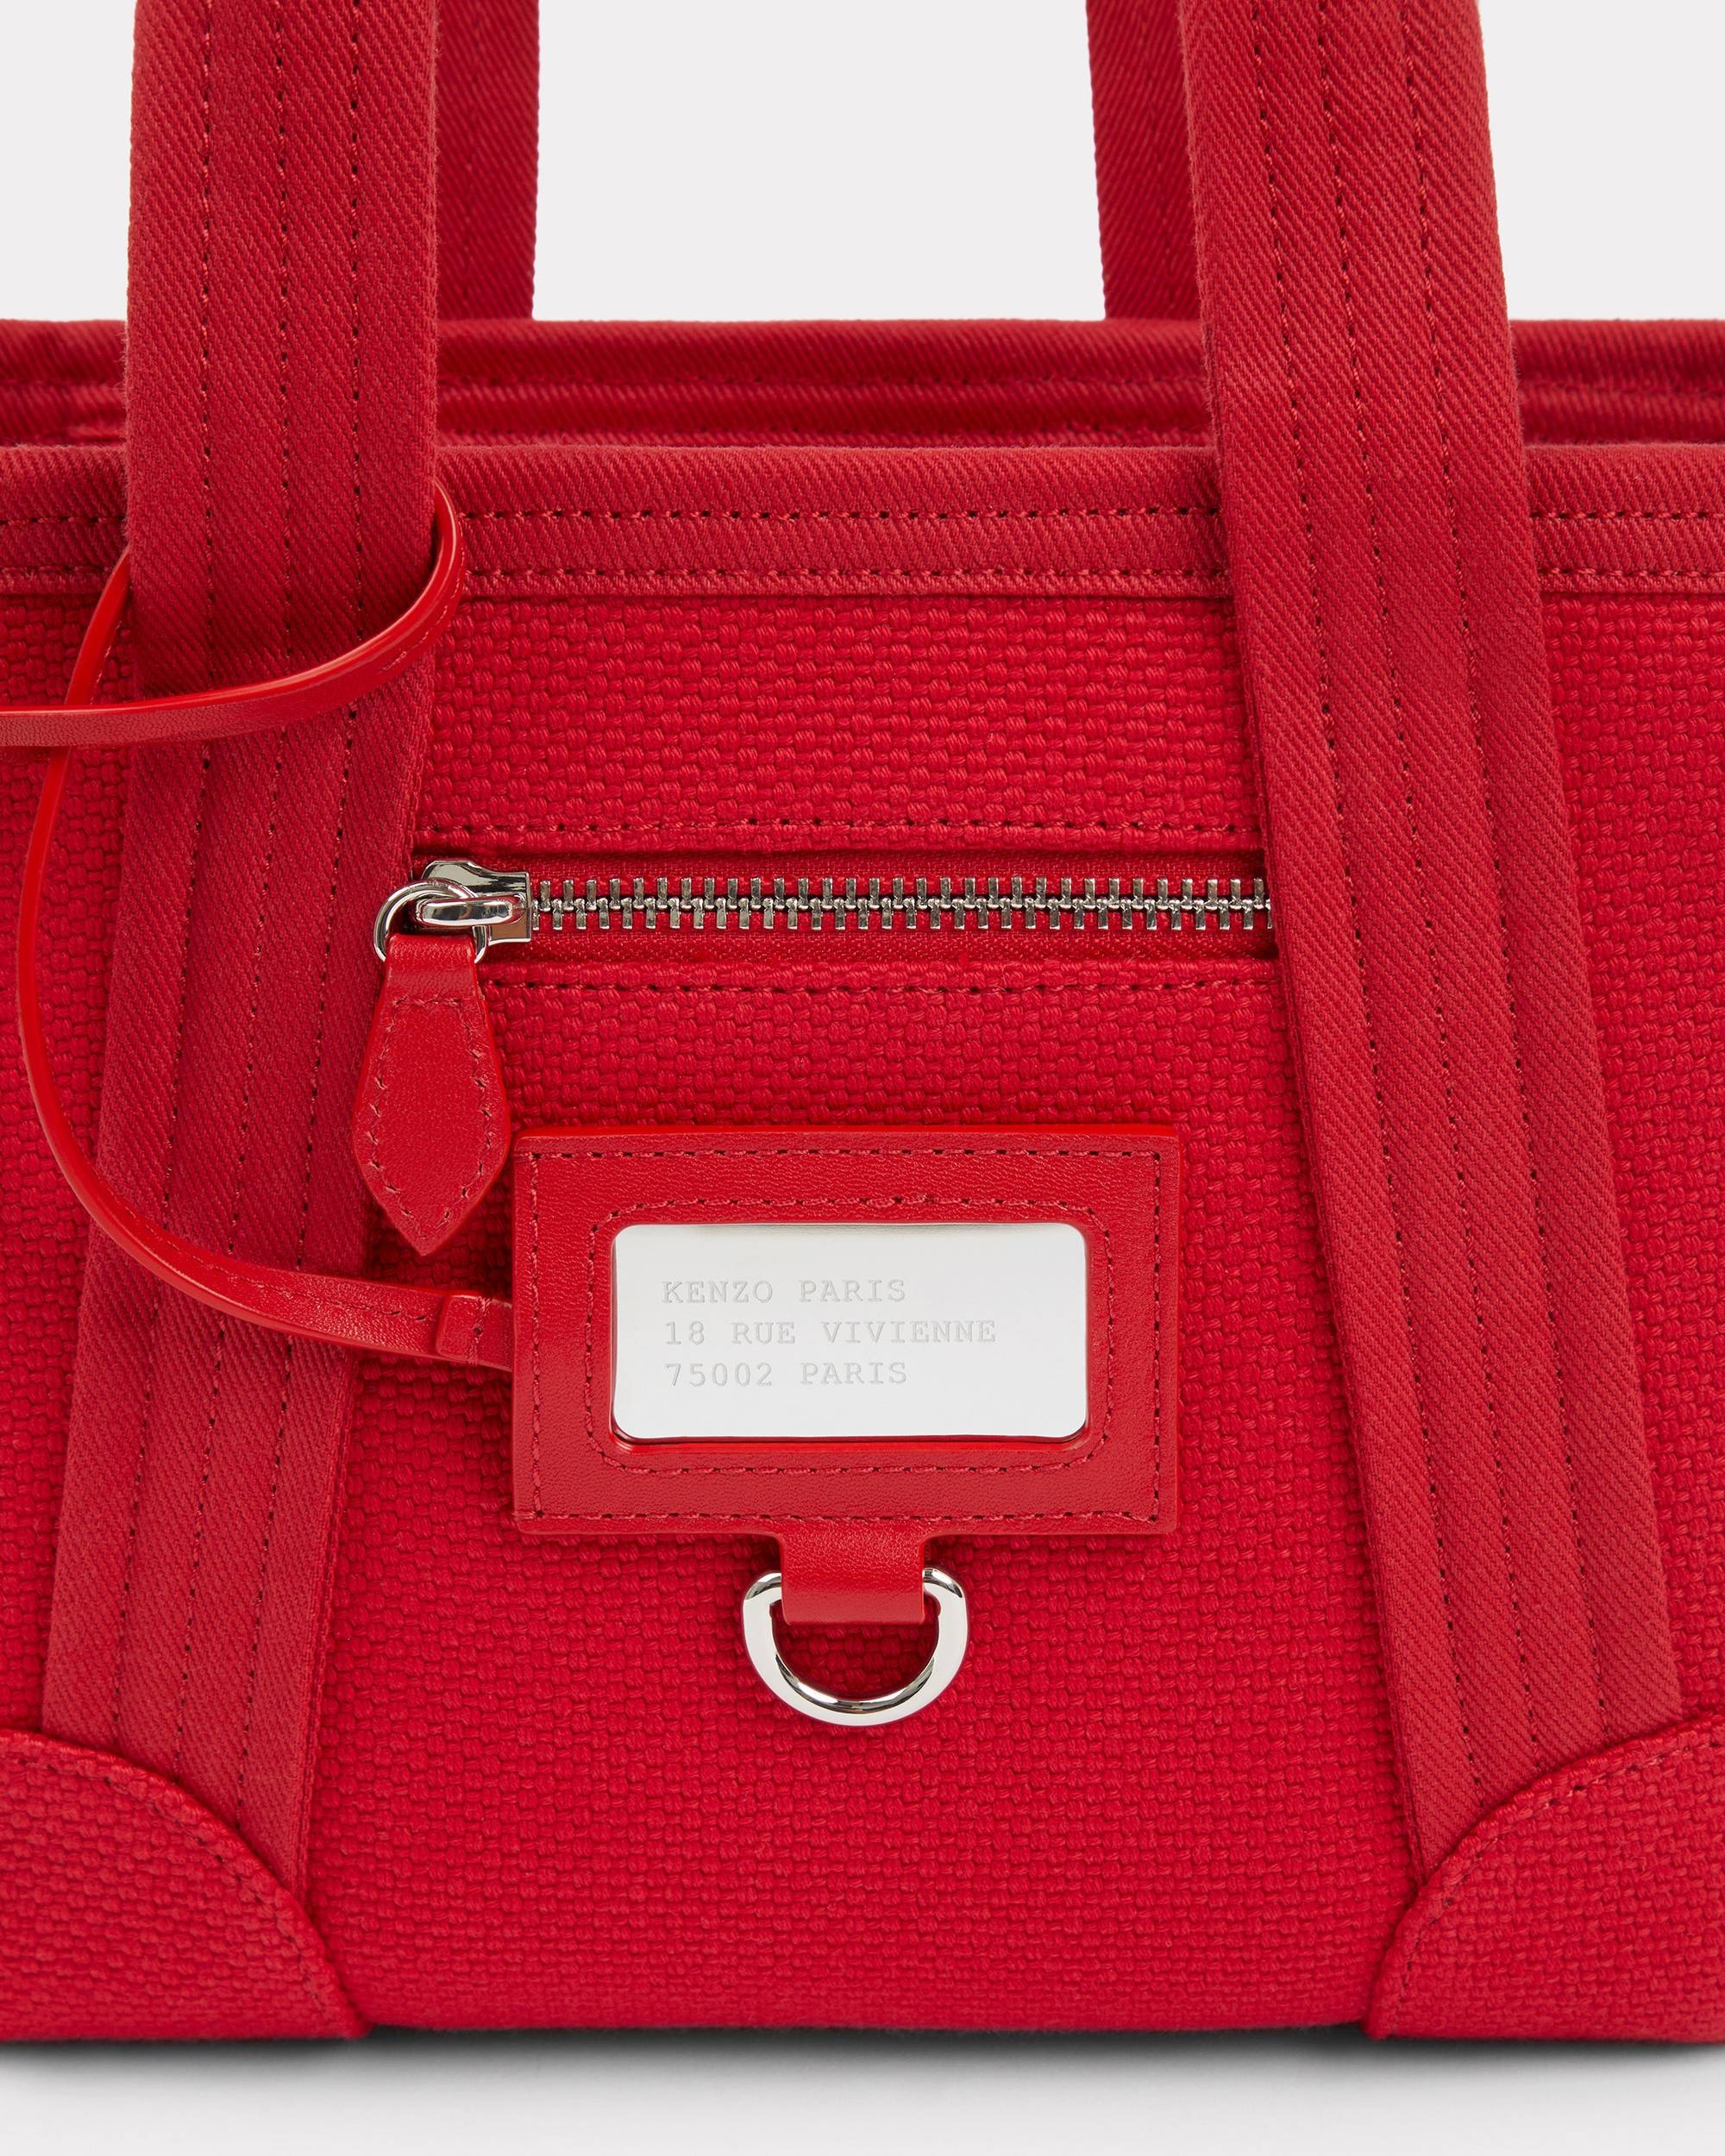 KENZO Paris miniature tote bag with strap - 5